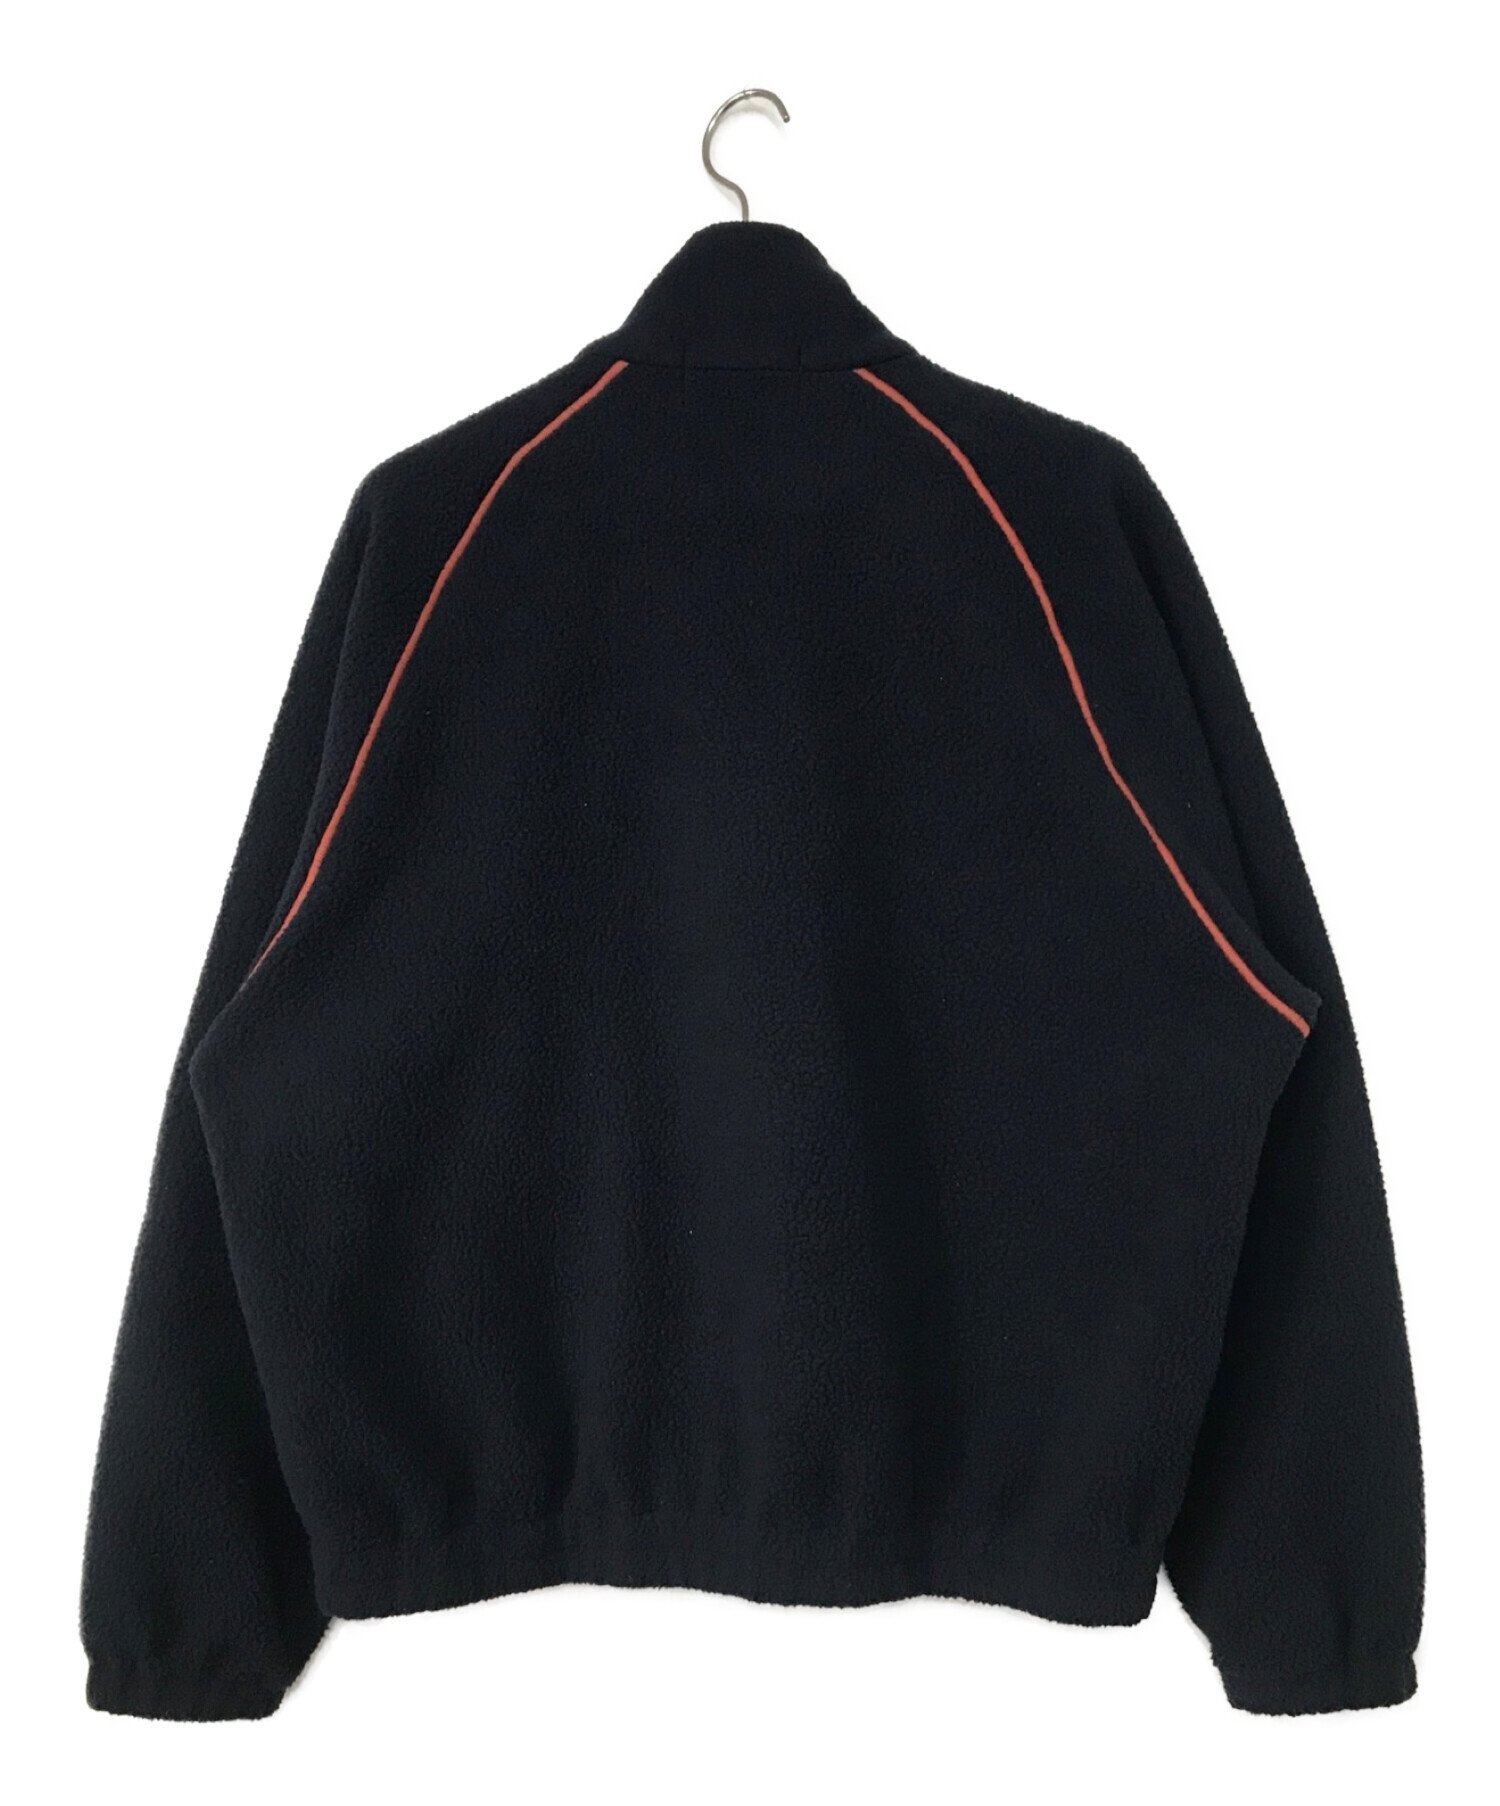 AURALEE (オーラリー) NEW BALANCE (ニューバランス) DS Fleece Quarter Zip Jacket ネイビー  サイズ:L